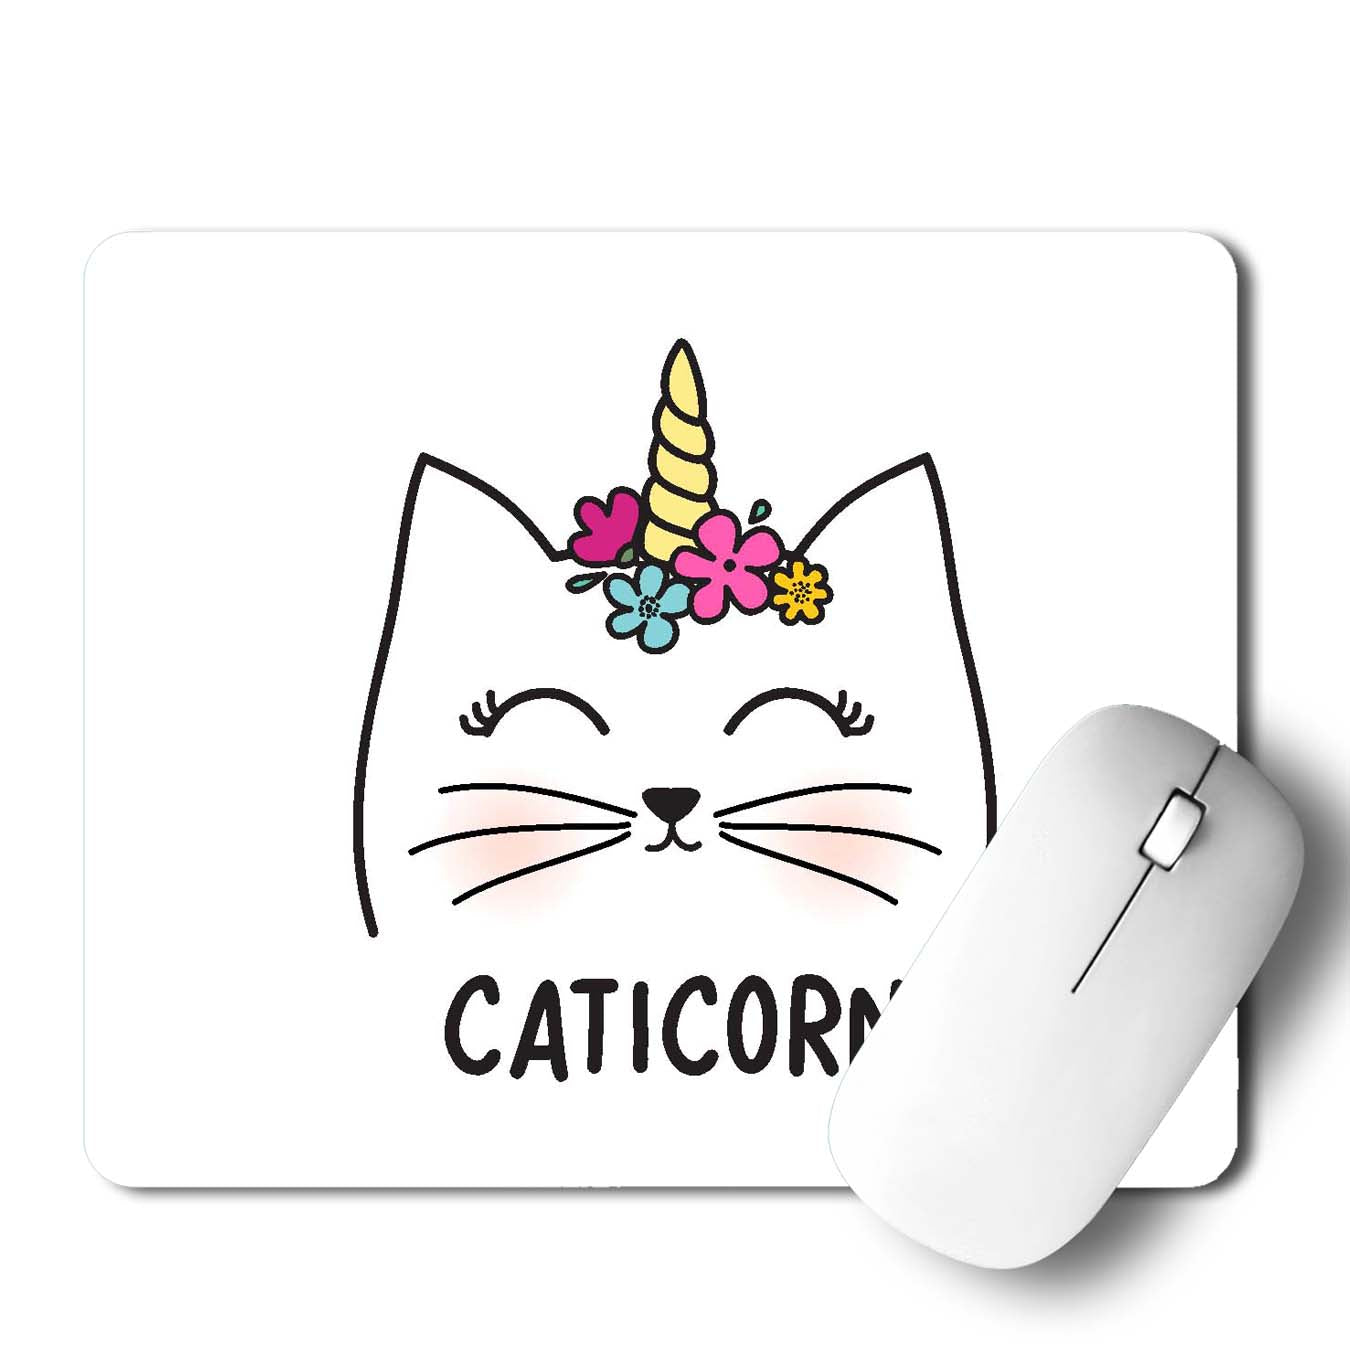 Caticorn Mouse Pad